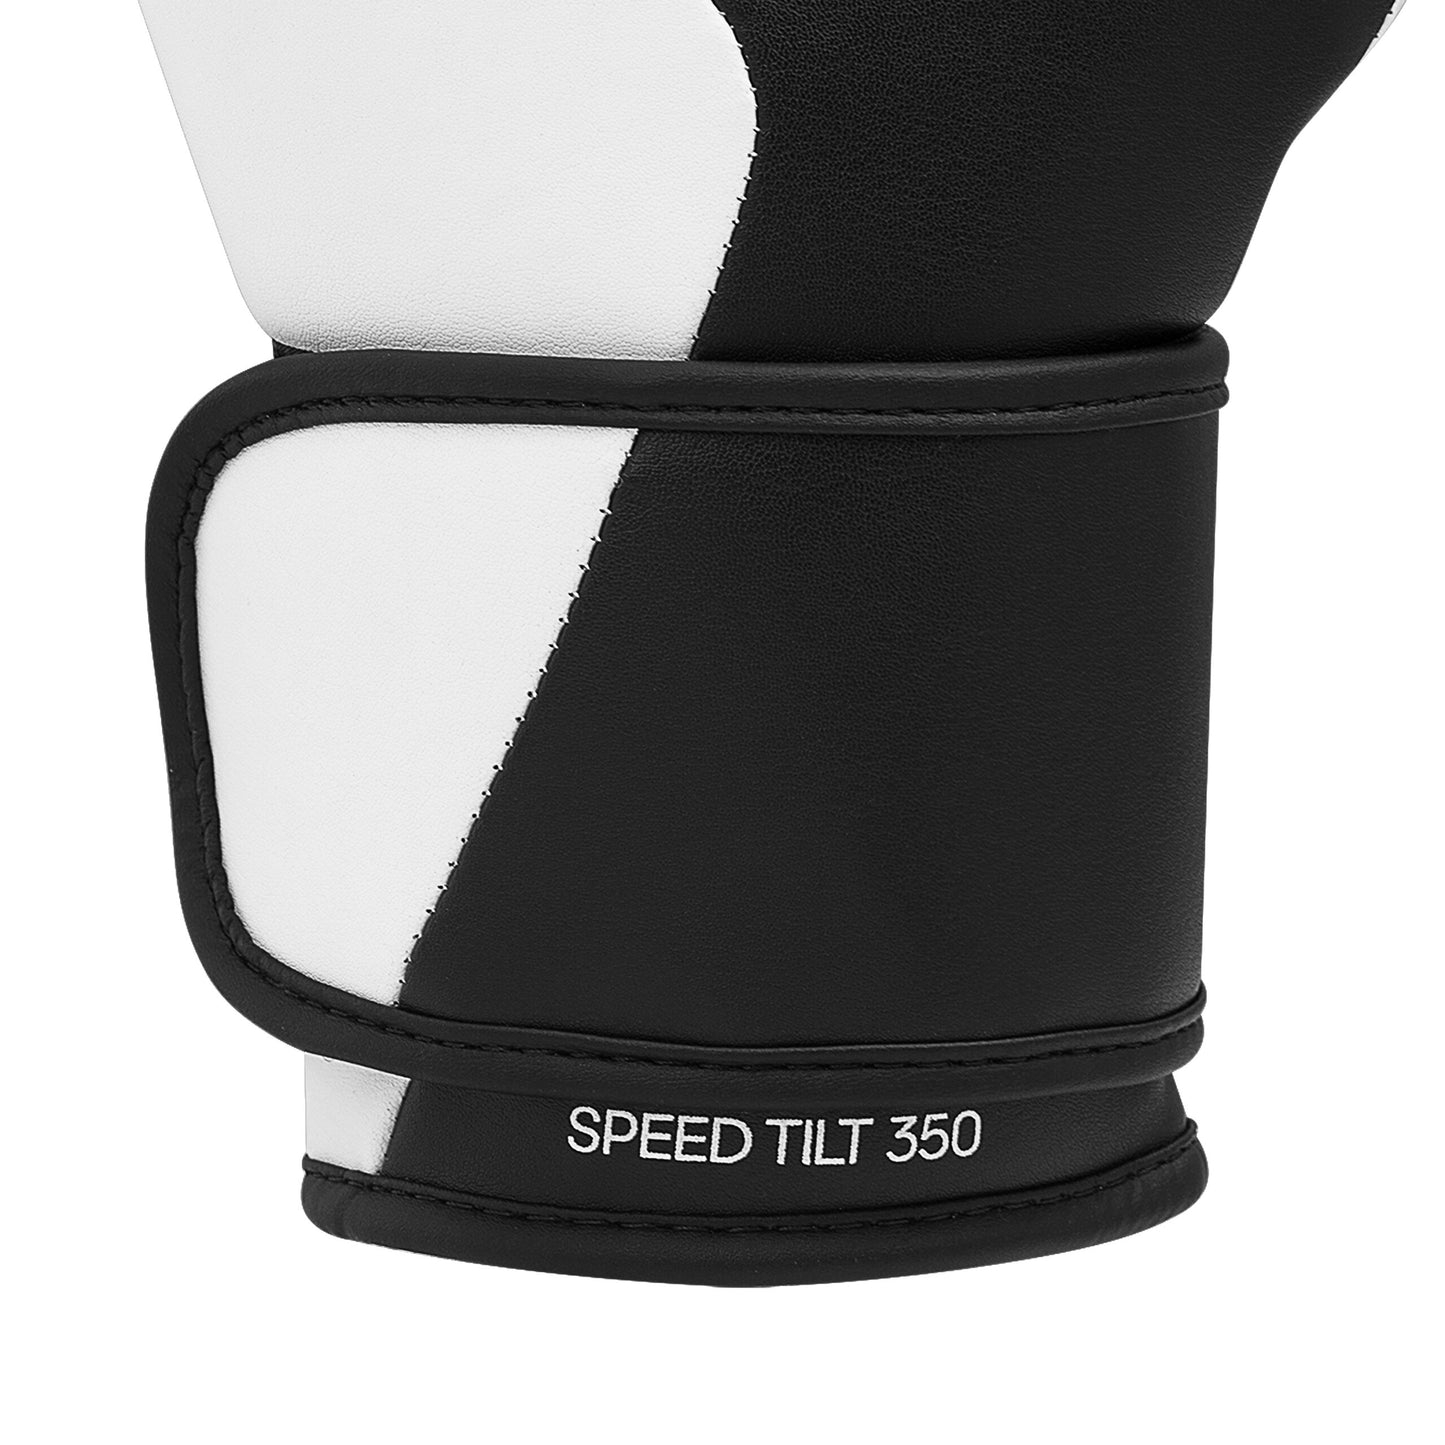 Adispd350tg Adidas Tilt 350 Pro Training Boxing Glove Strap Black White 07